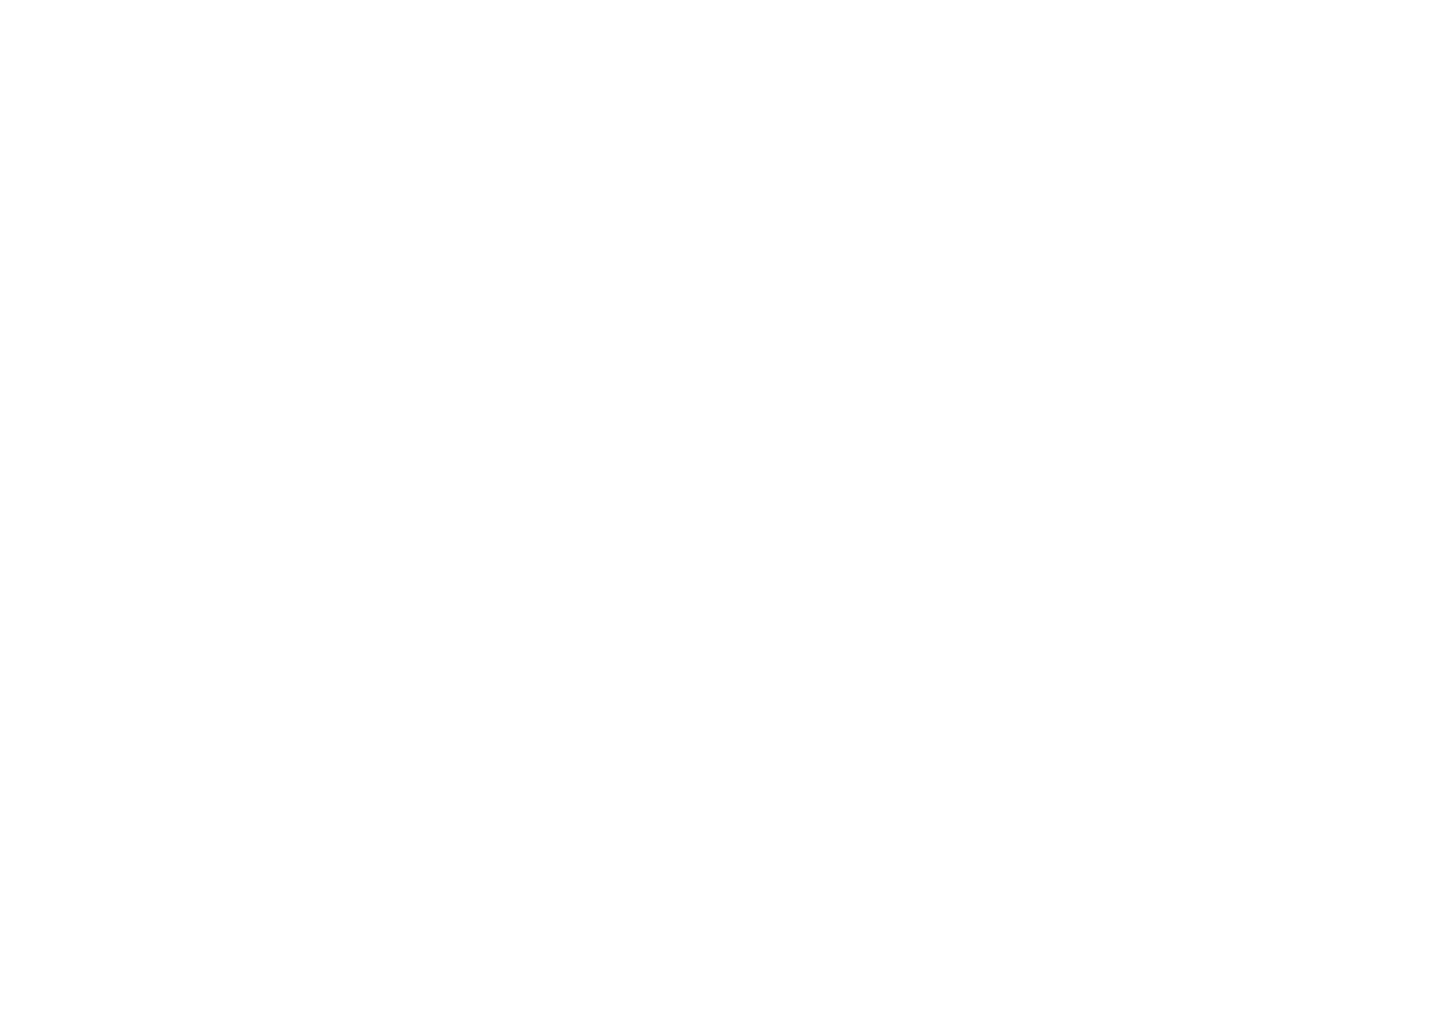 History of the TDS Logo | 2019 - 2021 (Tds Meme?) - YouTube